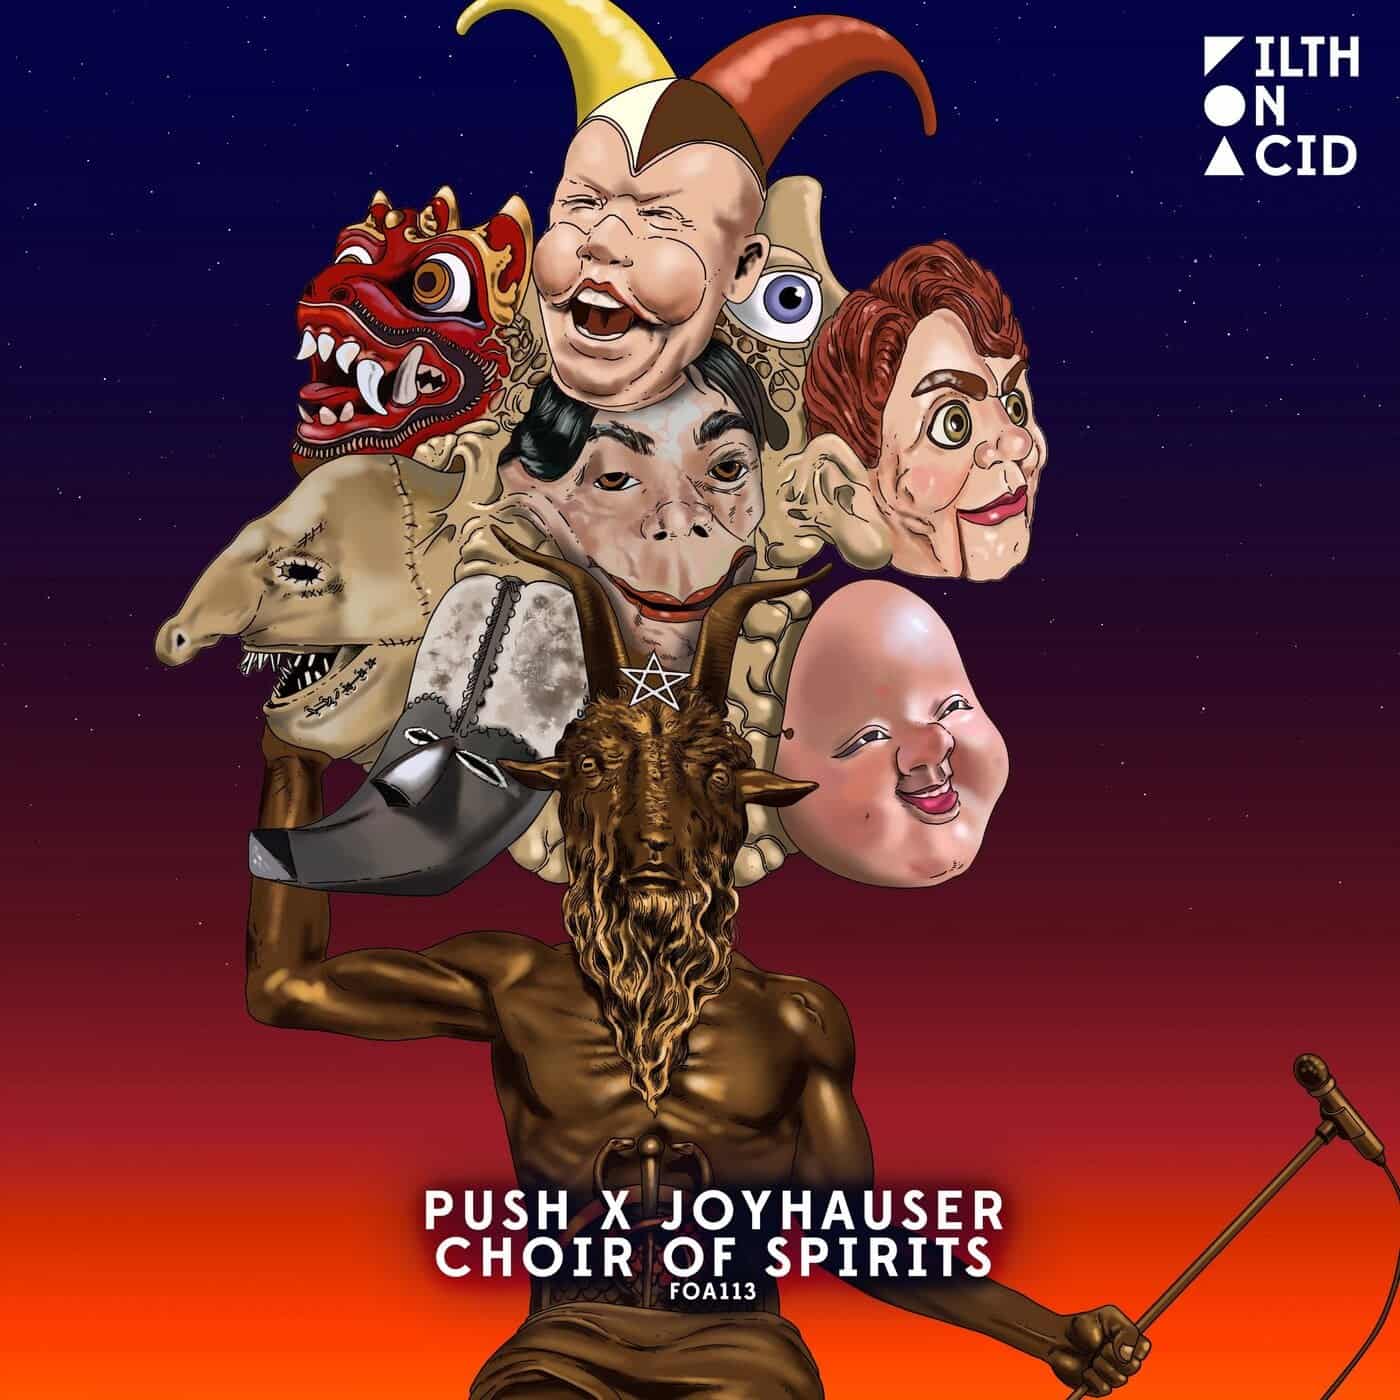 image cover: Push, Joyhauser - Choir Of Spirits / FOA113